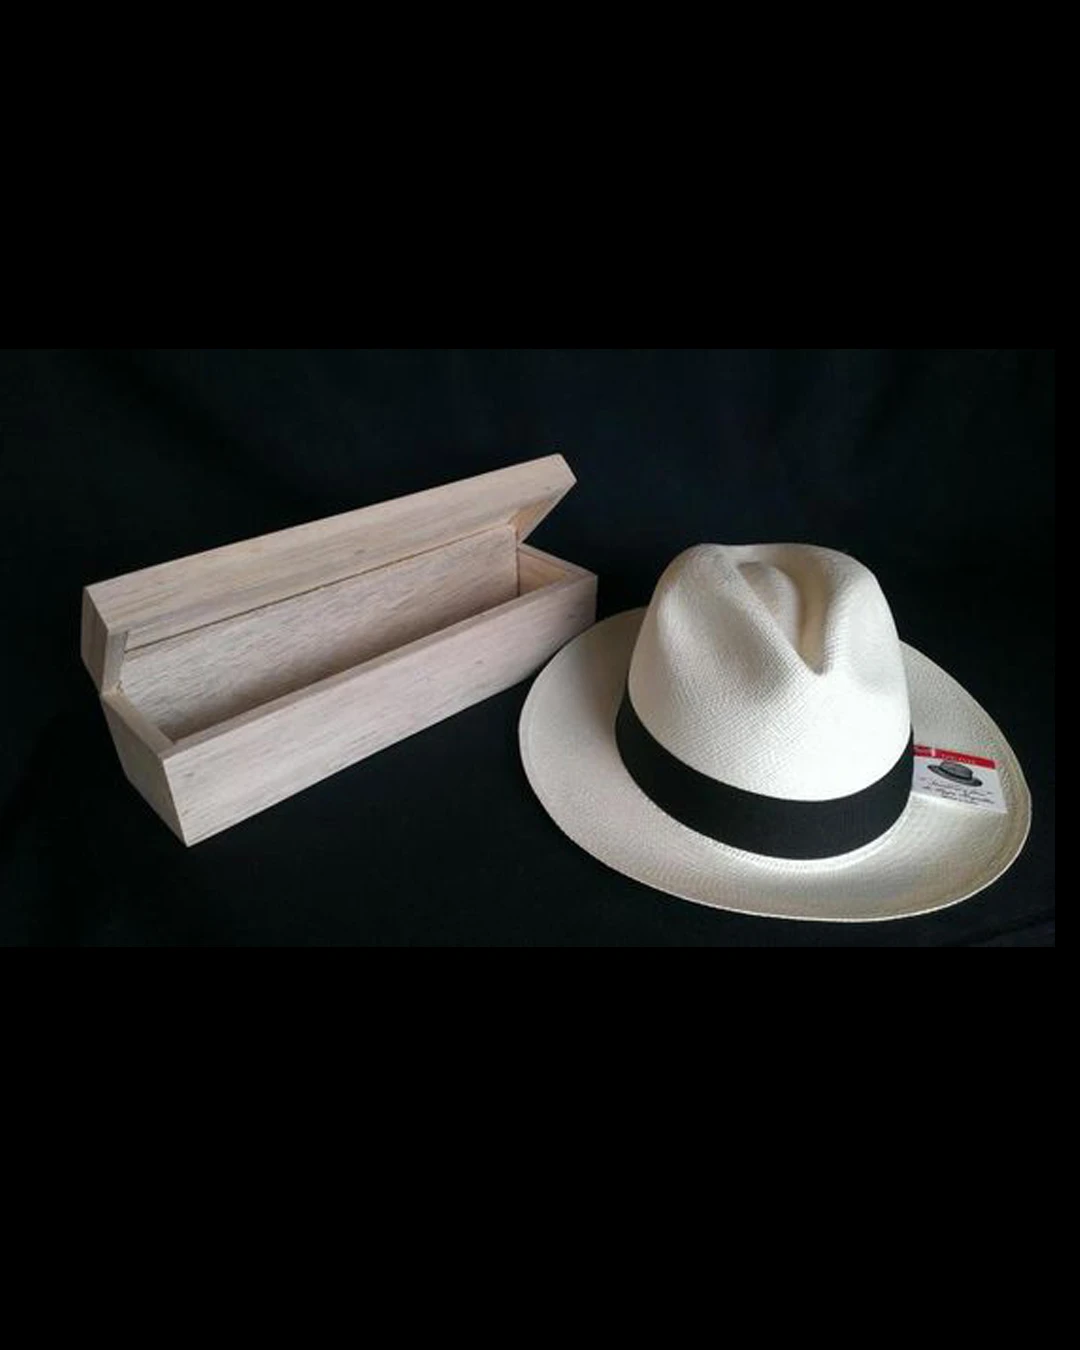 Ecuadorian straw hat